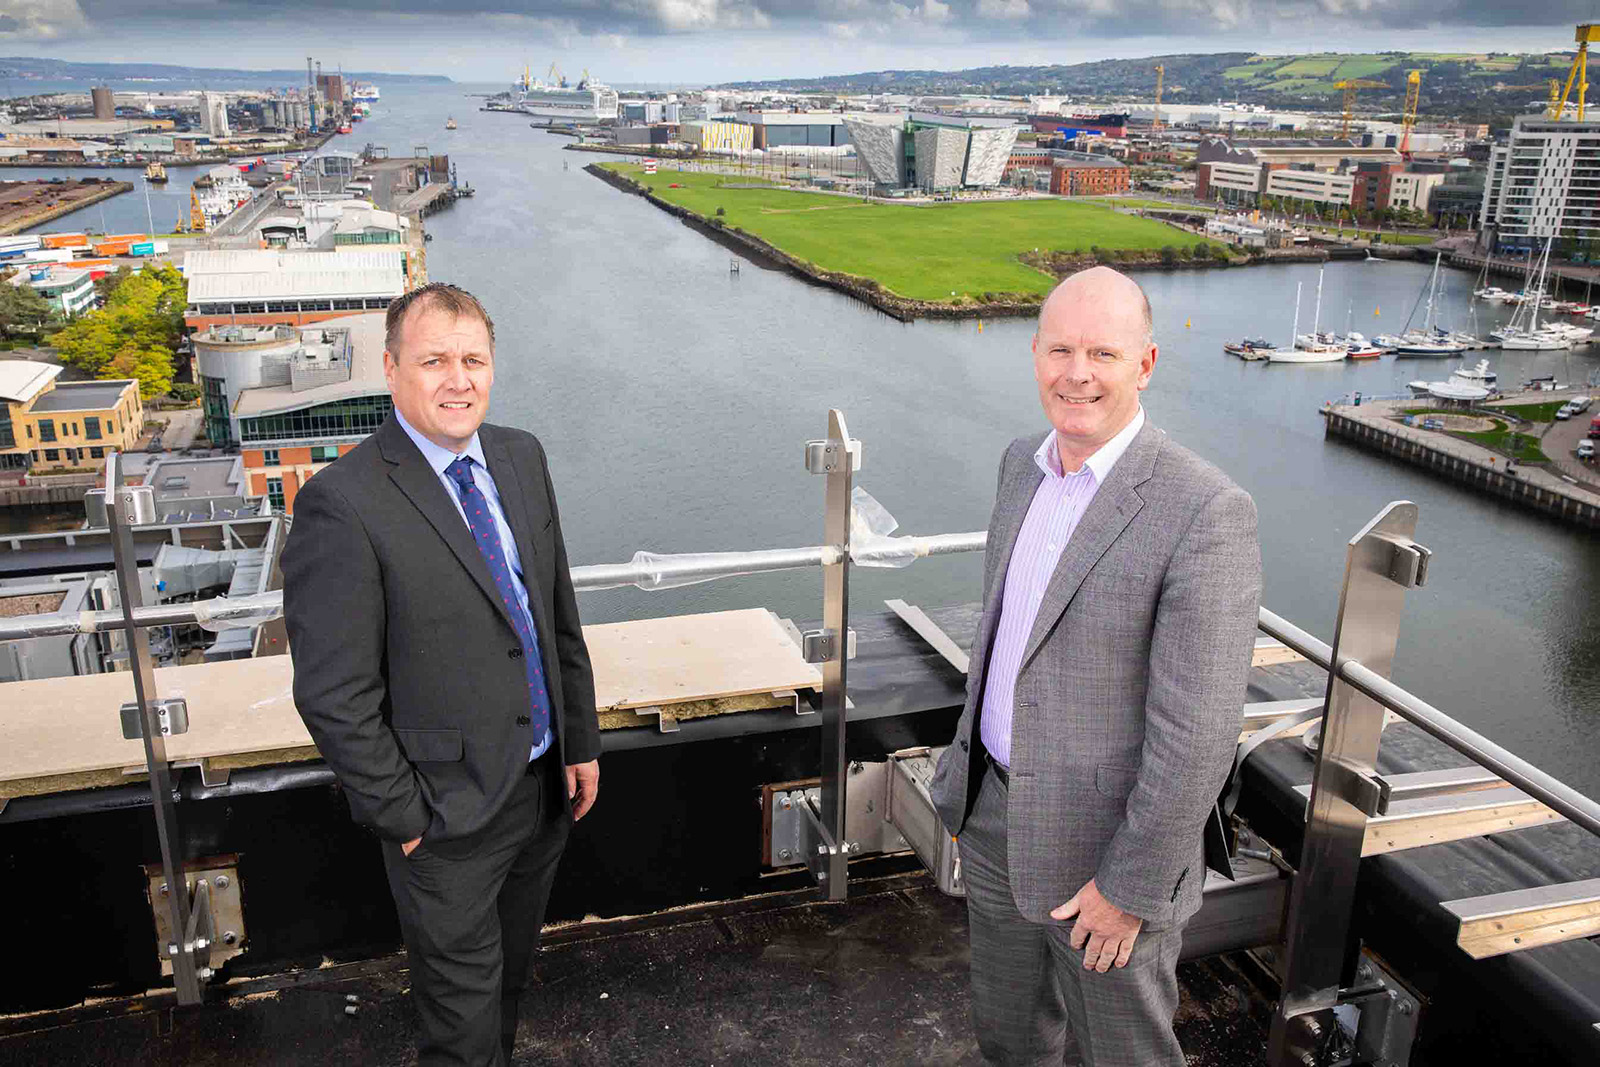 Darrell McGuckian, buildings operations director, Farrans Construction and Belfast Harbour’s CEO, Joe O’Neill